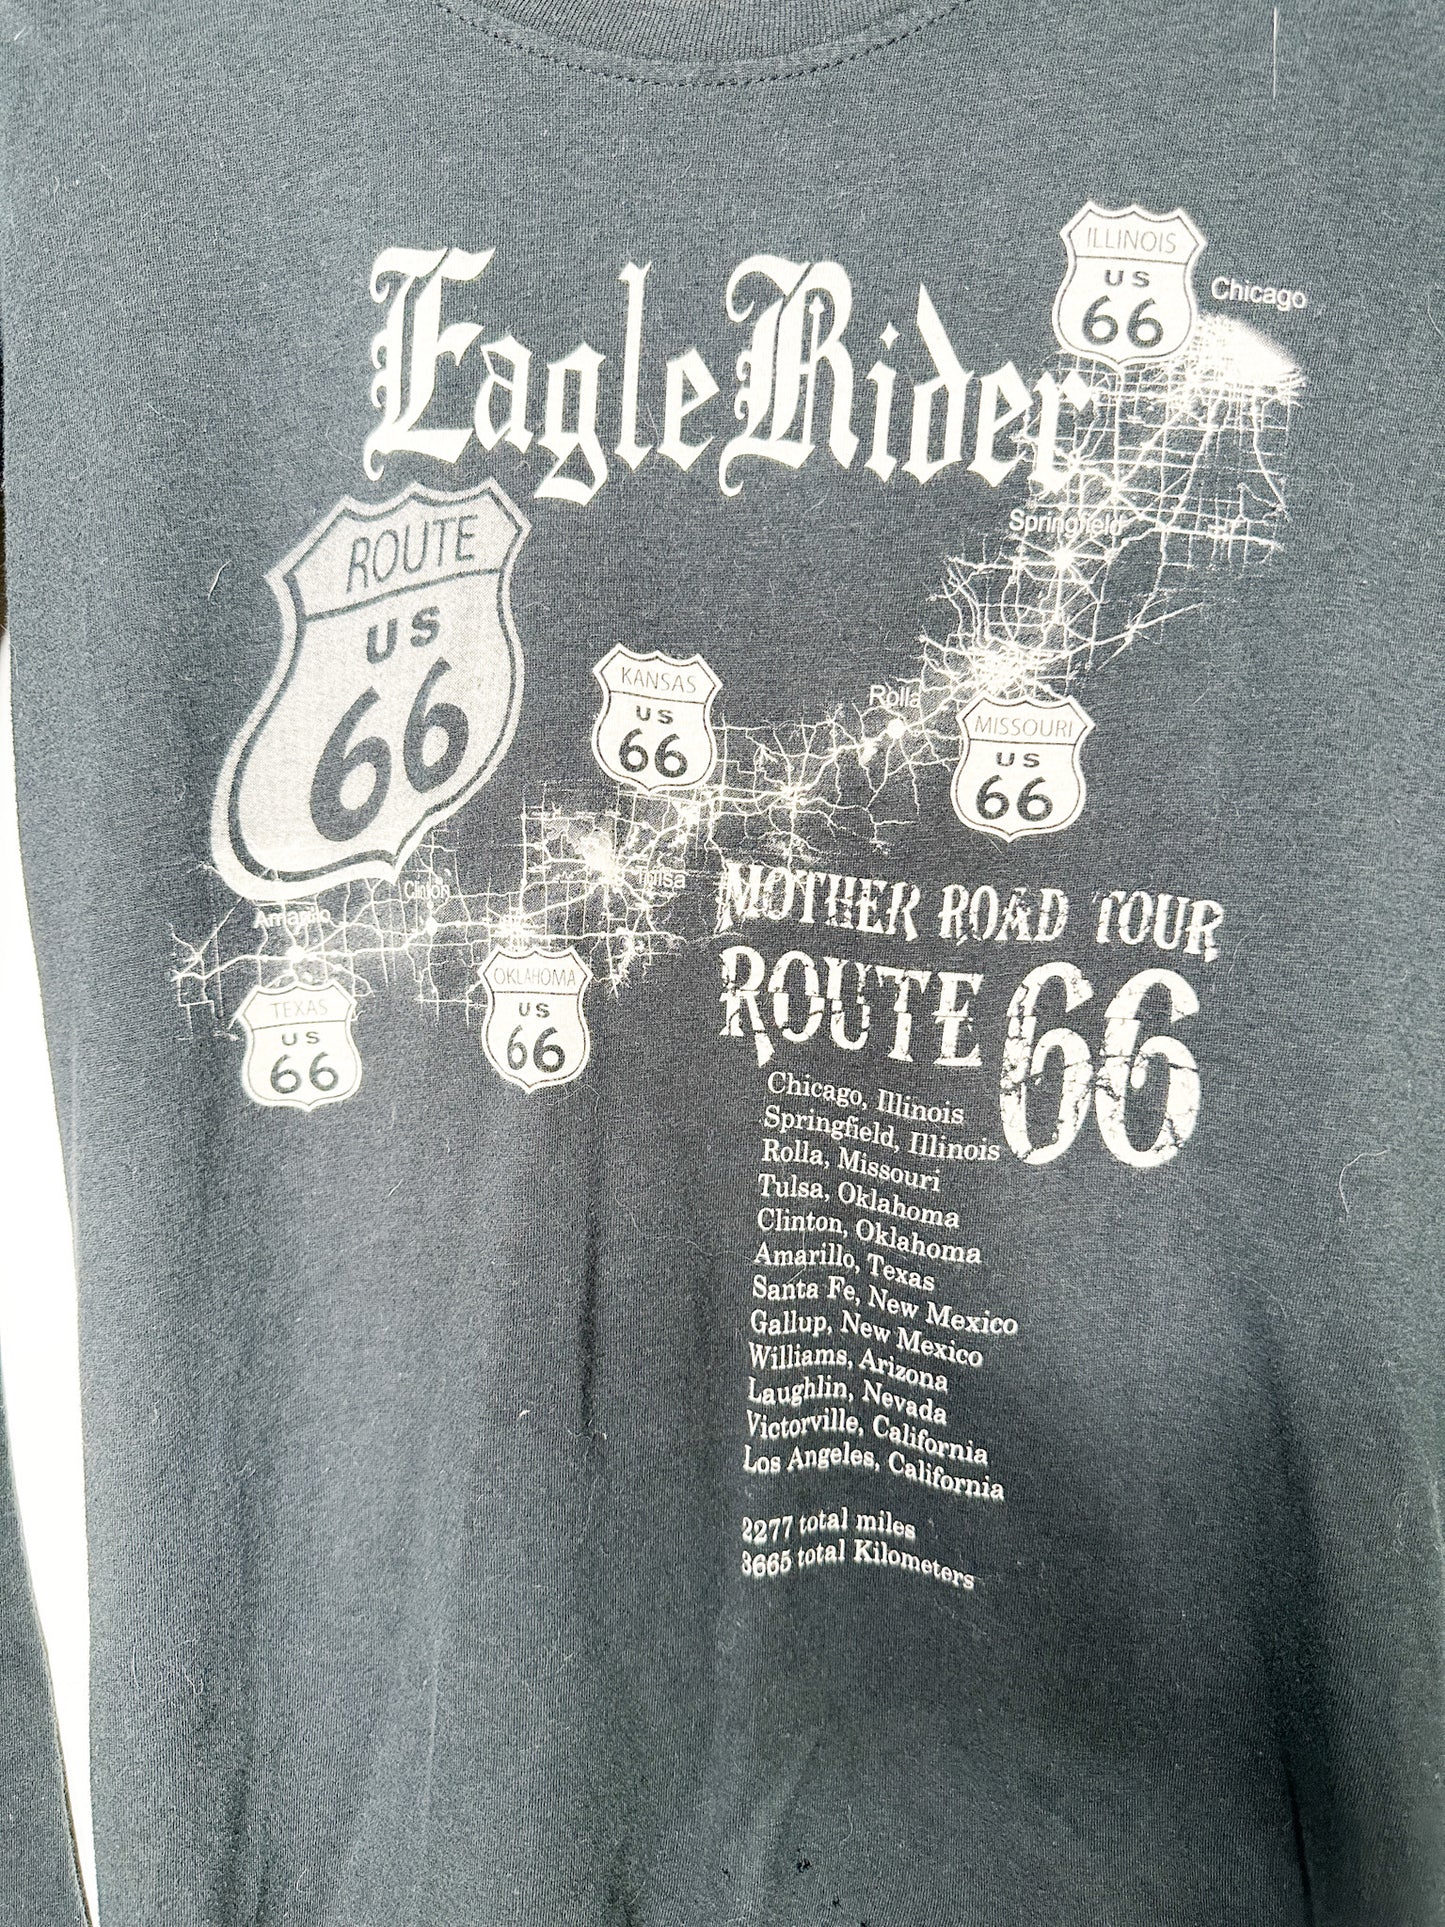 Vintage Eagle Rider T-Shirt Long Sleeves | Motorcycle T-shirts | Size: XS